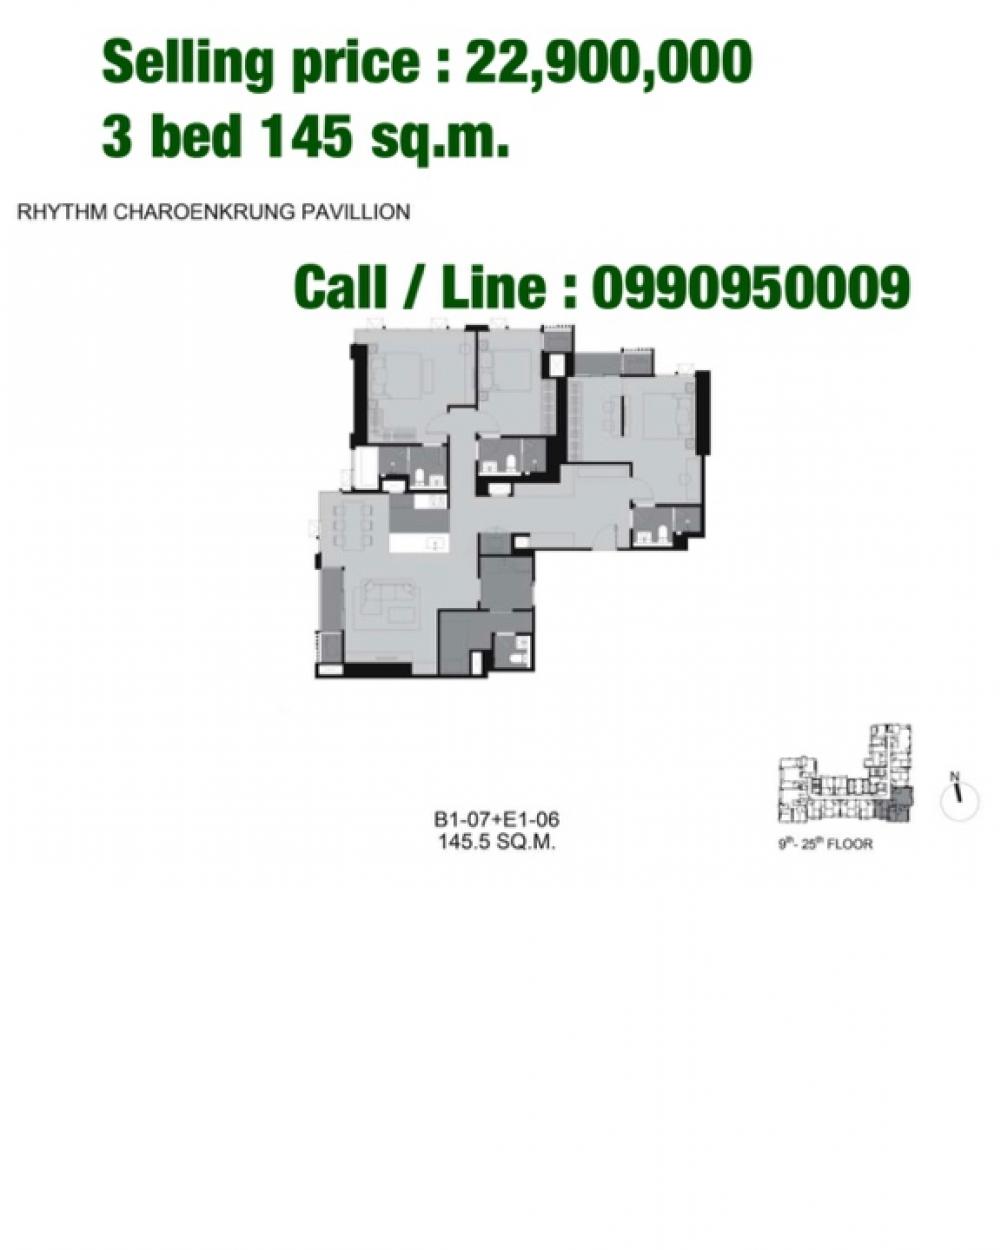 For SaleCondoSathorn, Narathiwat : 3 bed 145 sq.m. Selling price : 27,200,000 call/Line : 0990950009